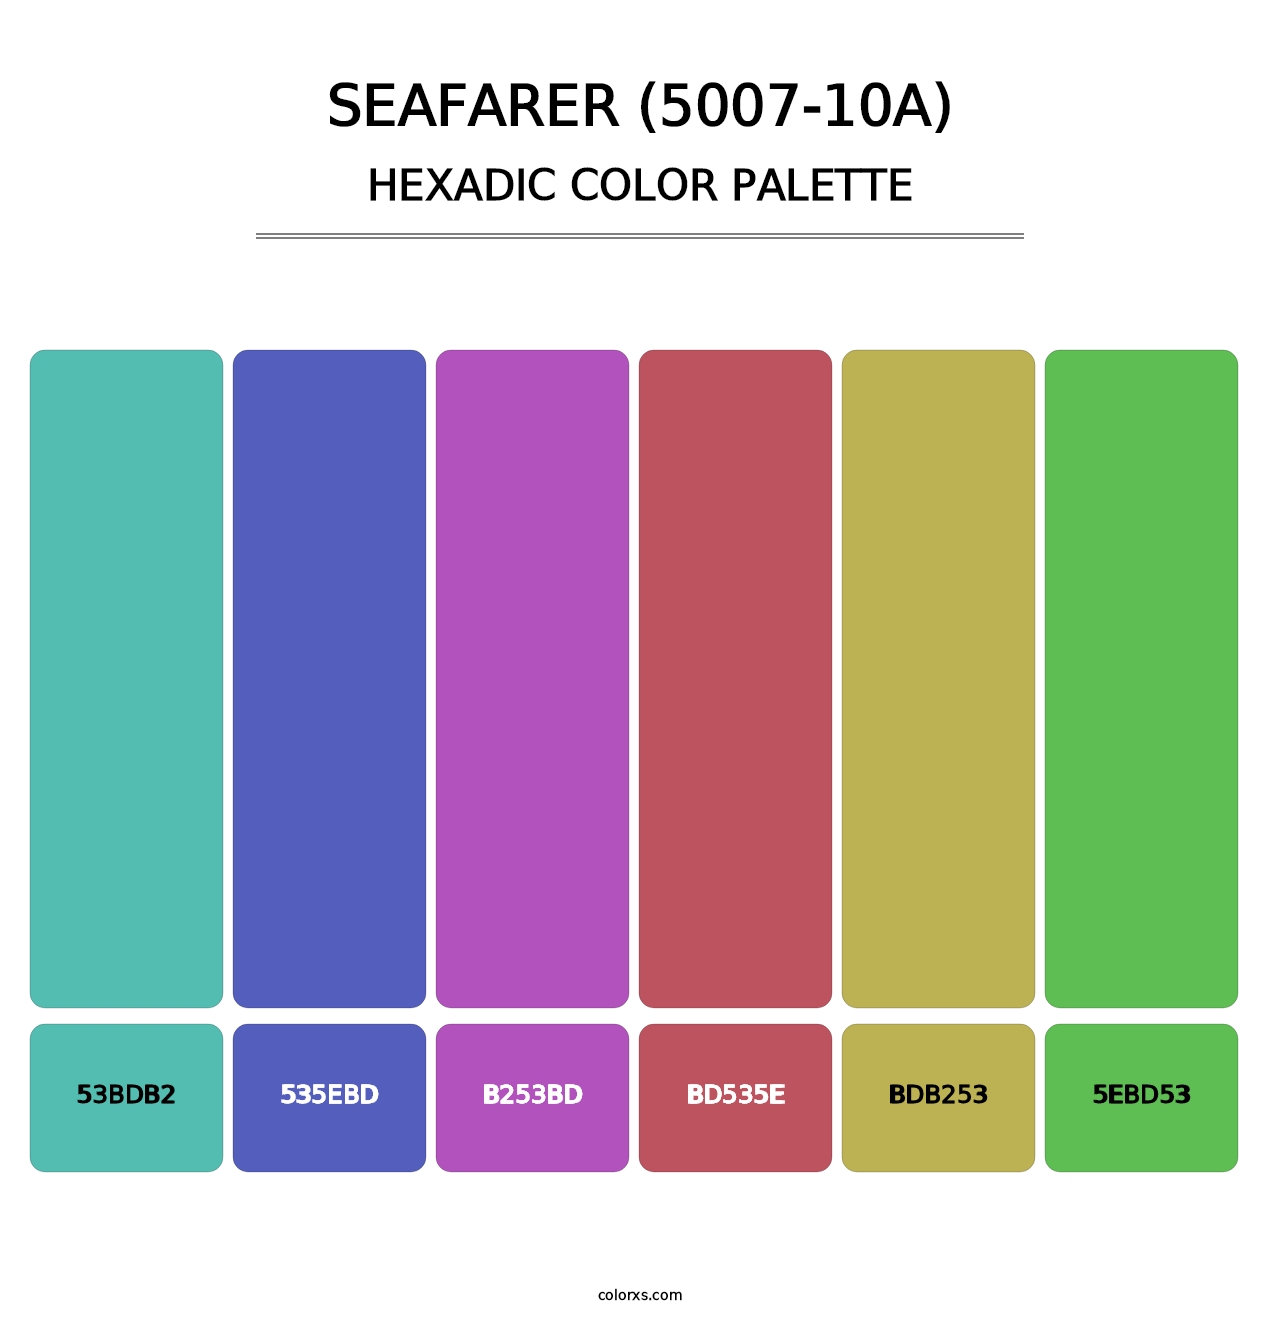 Seafarer (5007-10A) - Hexadic Color Palette